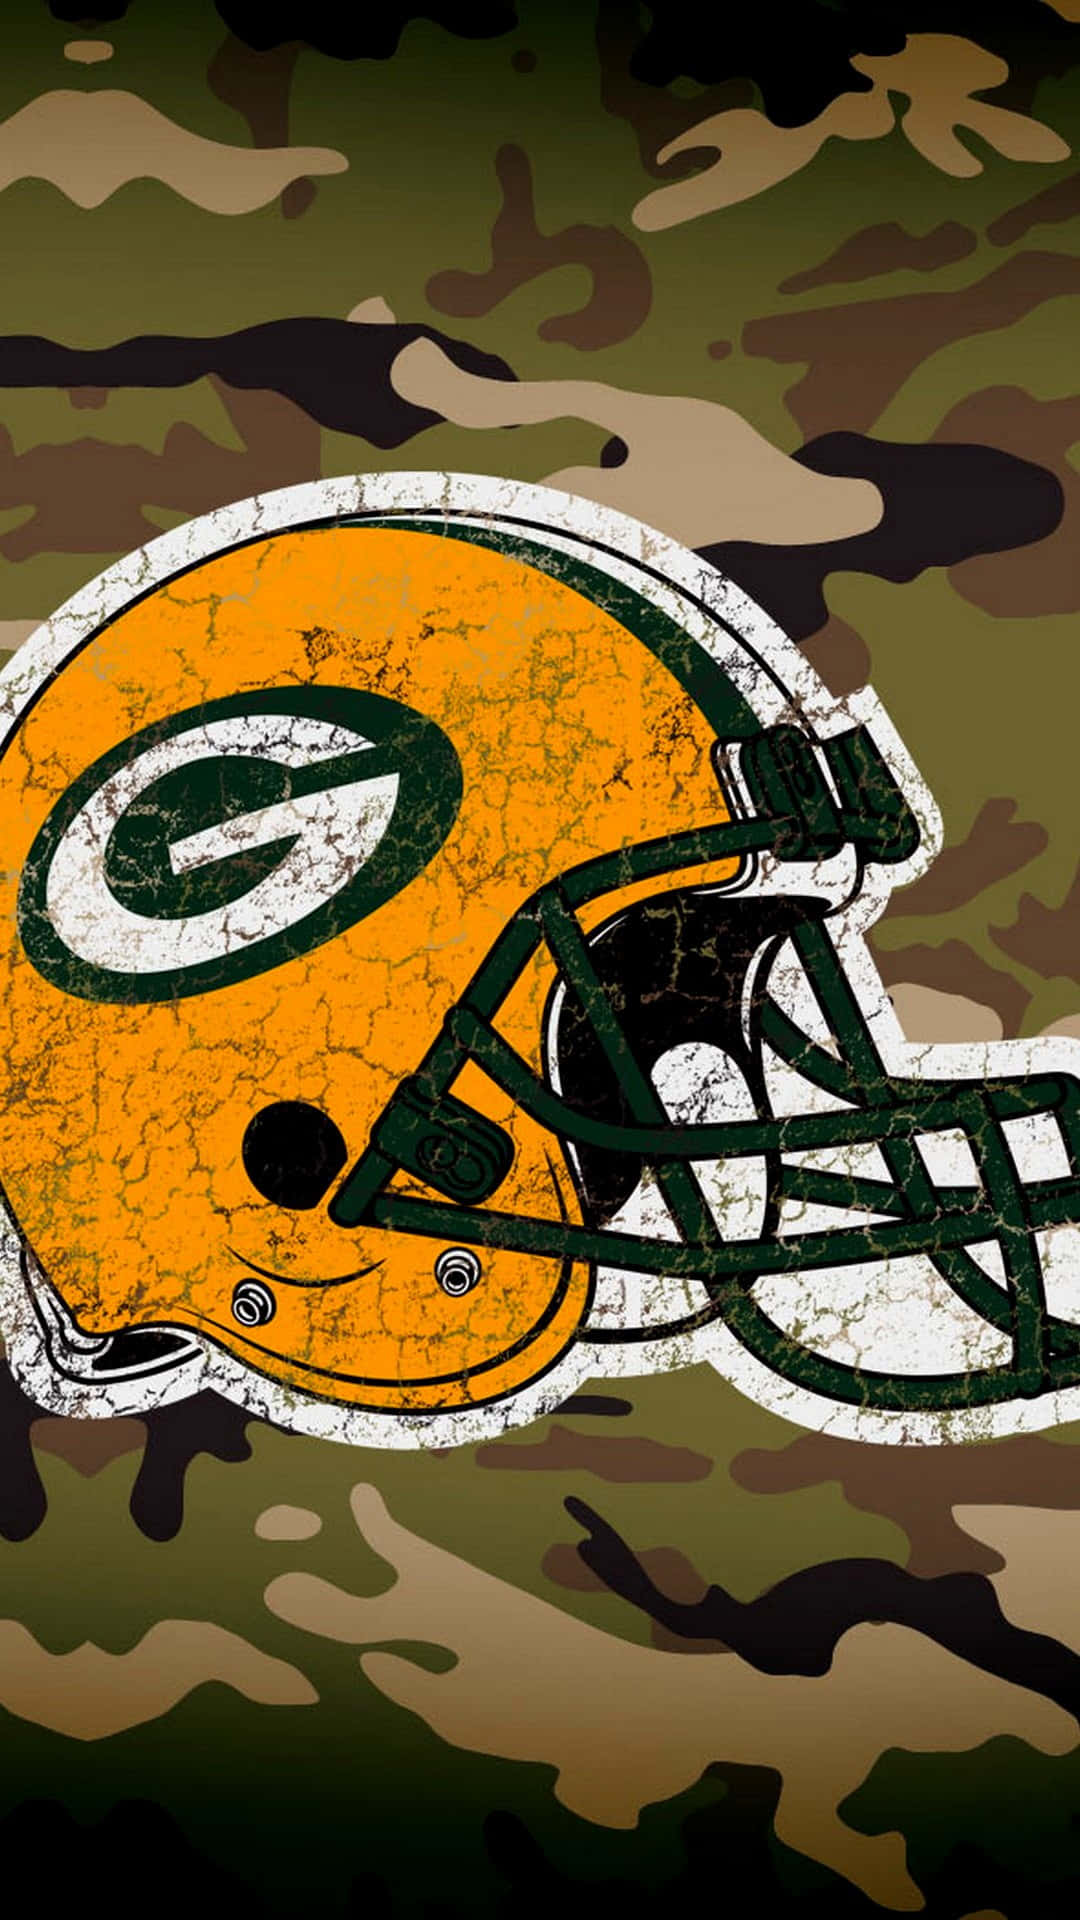 Green Bay Packers logo on field